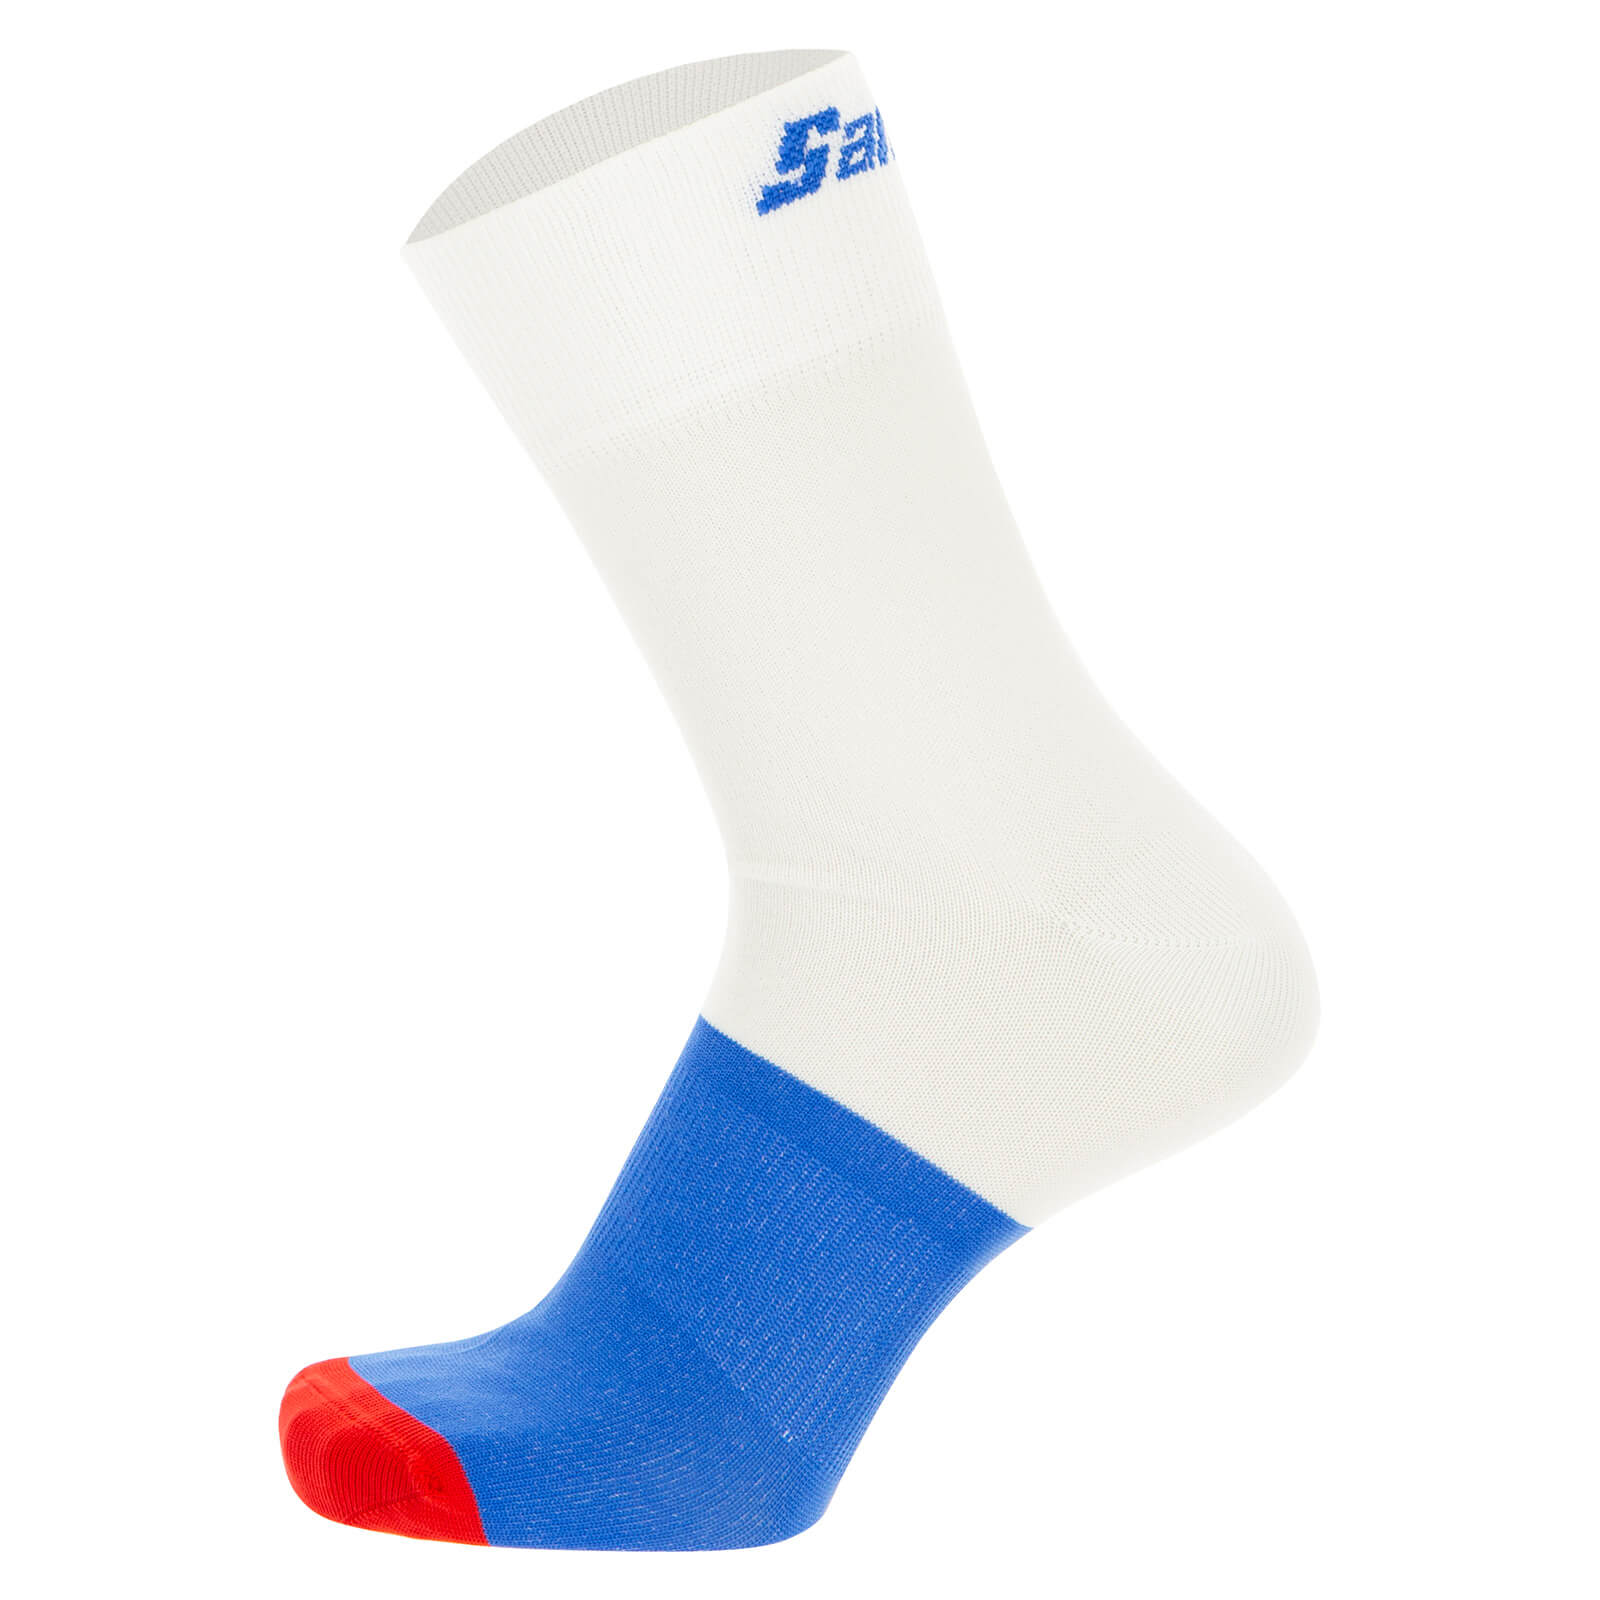 Santini Vincenzo Nibali Medium Profile Socks - XS/S